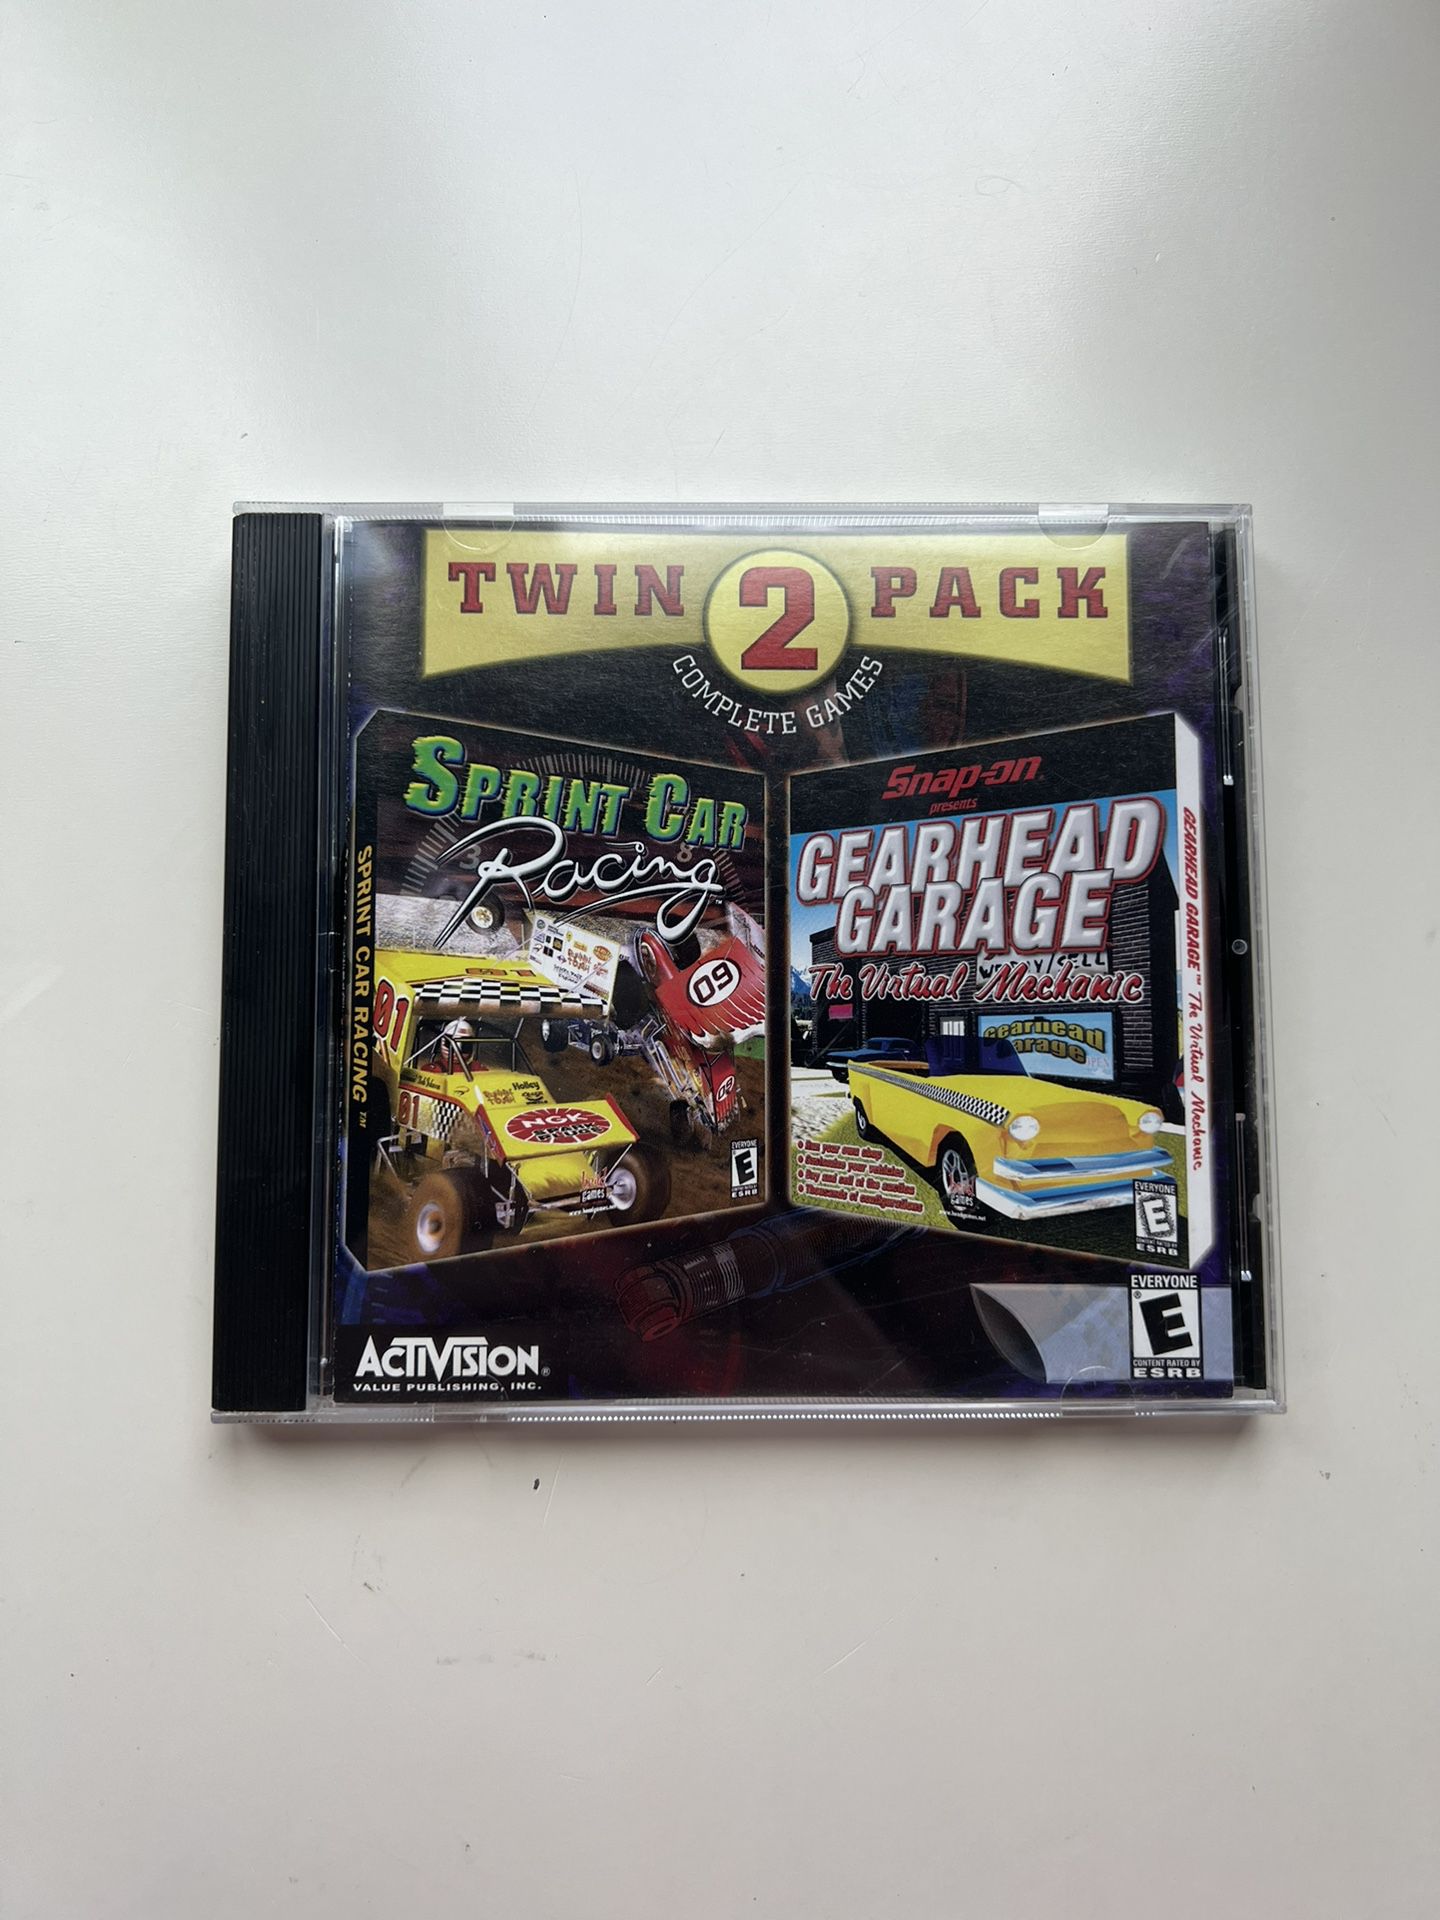 Twin Pack Snap On Gearhead Garage The Virtual Mechanic Sprint Car Racing PC 2000